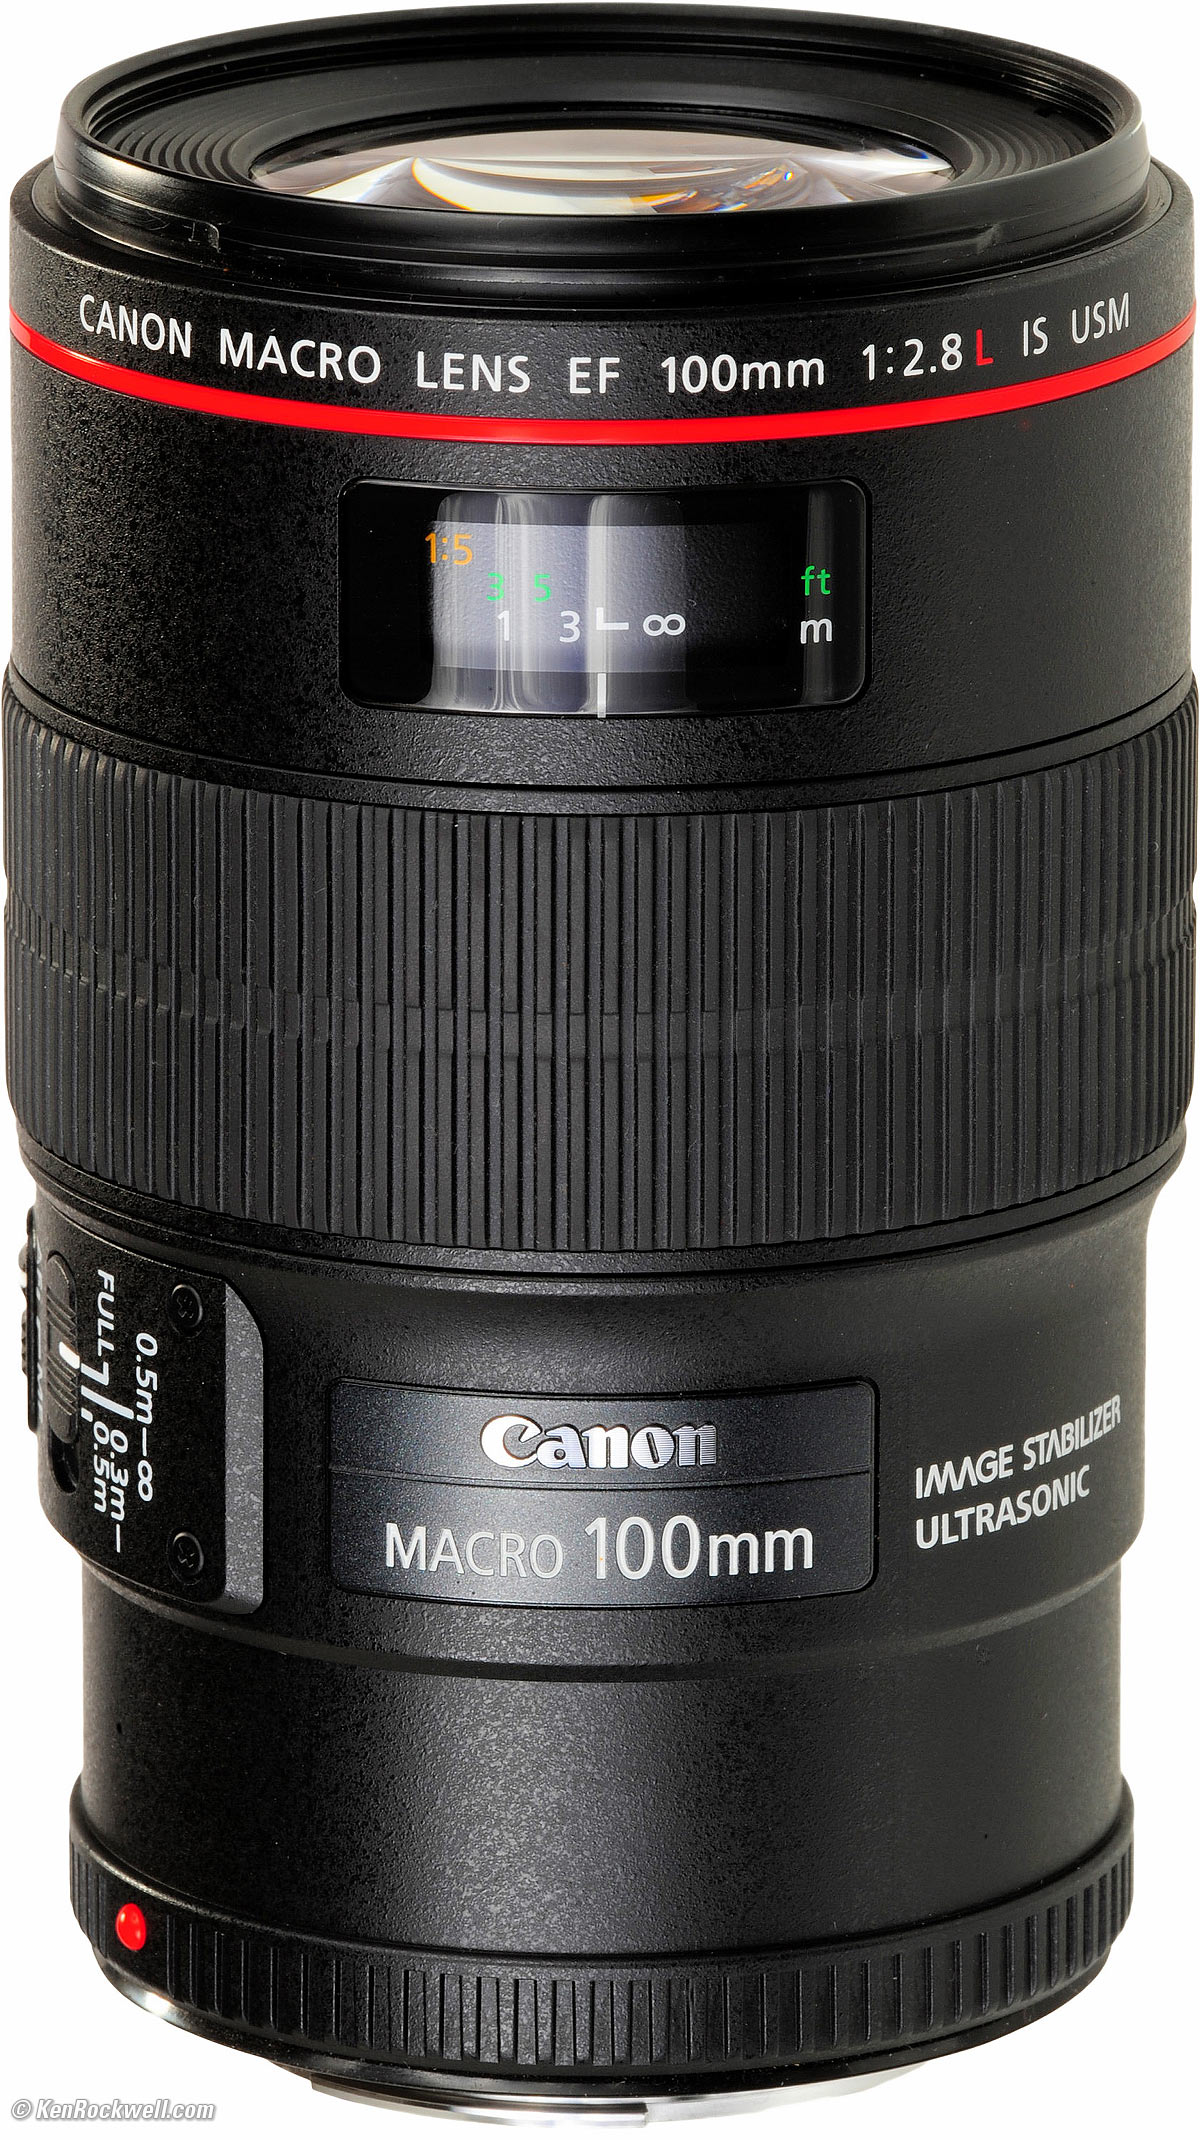 k268 Canon MACRO LENS EF 100mm F2.8